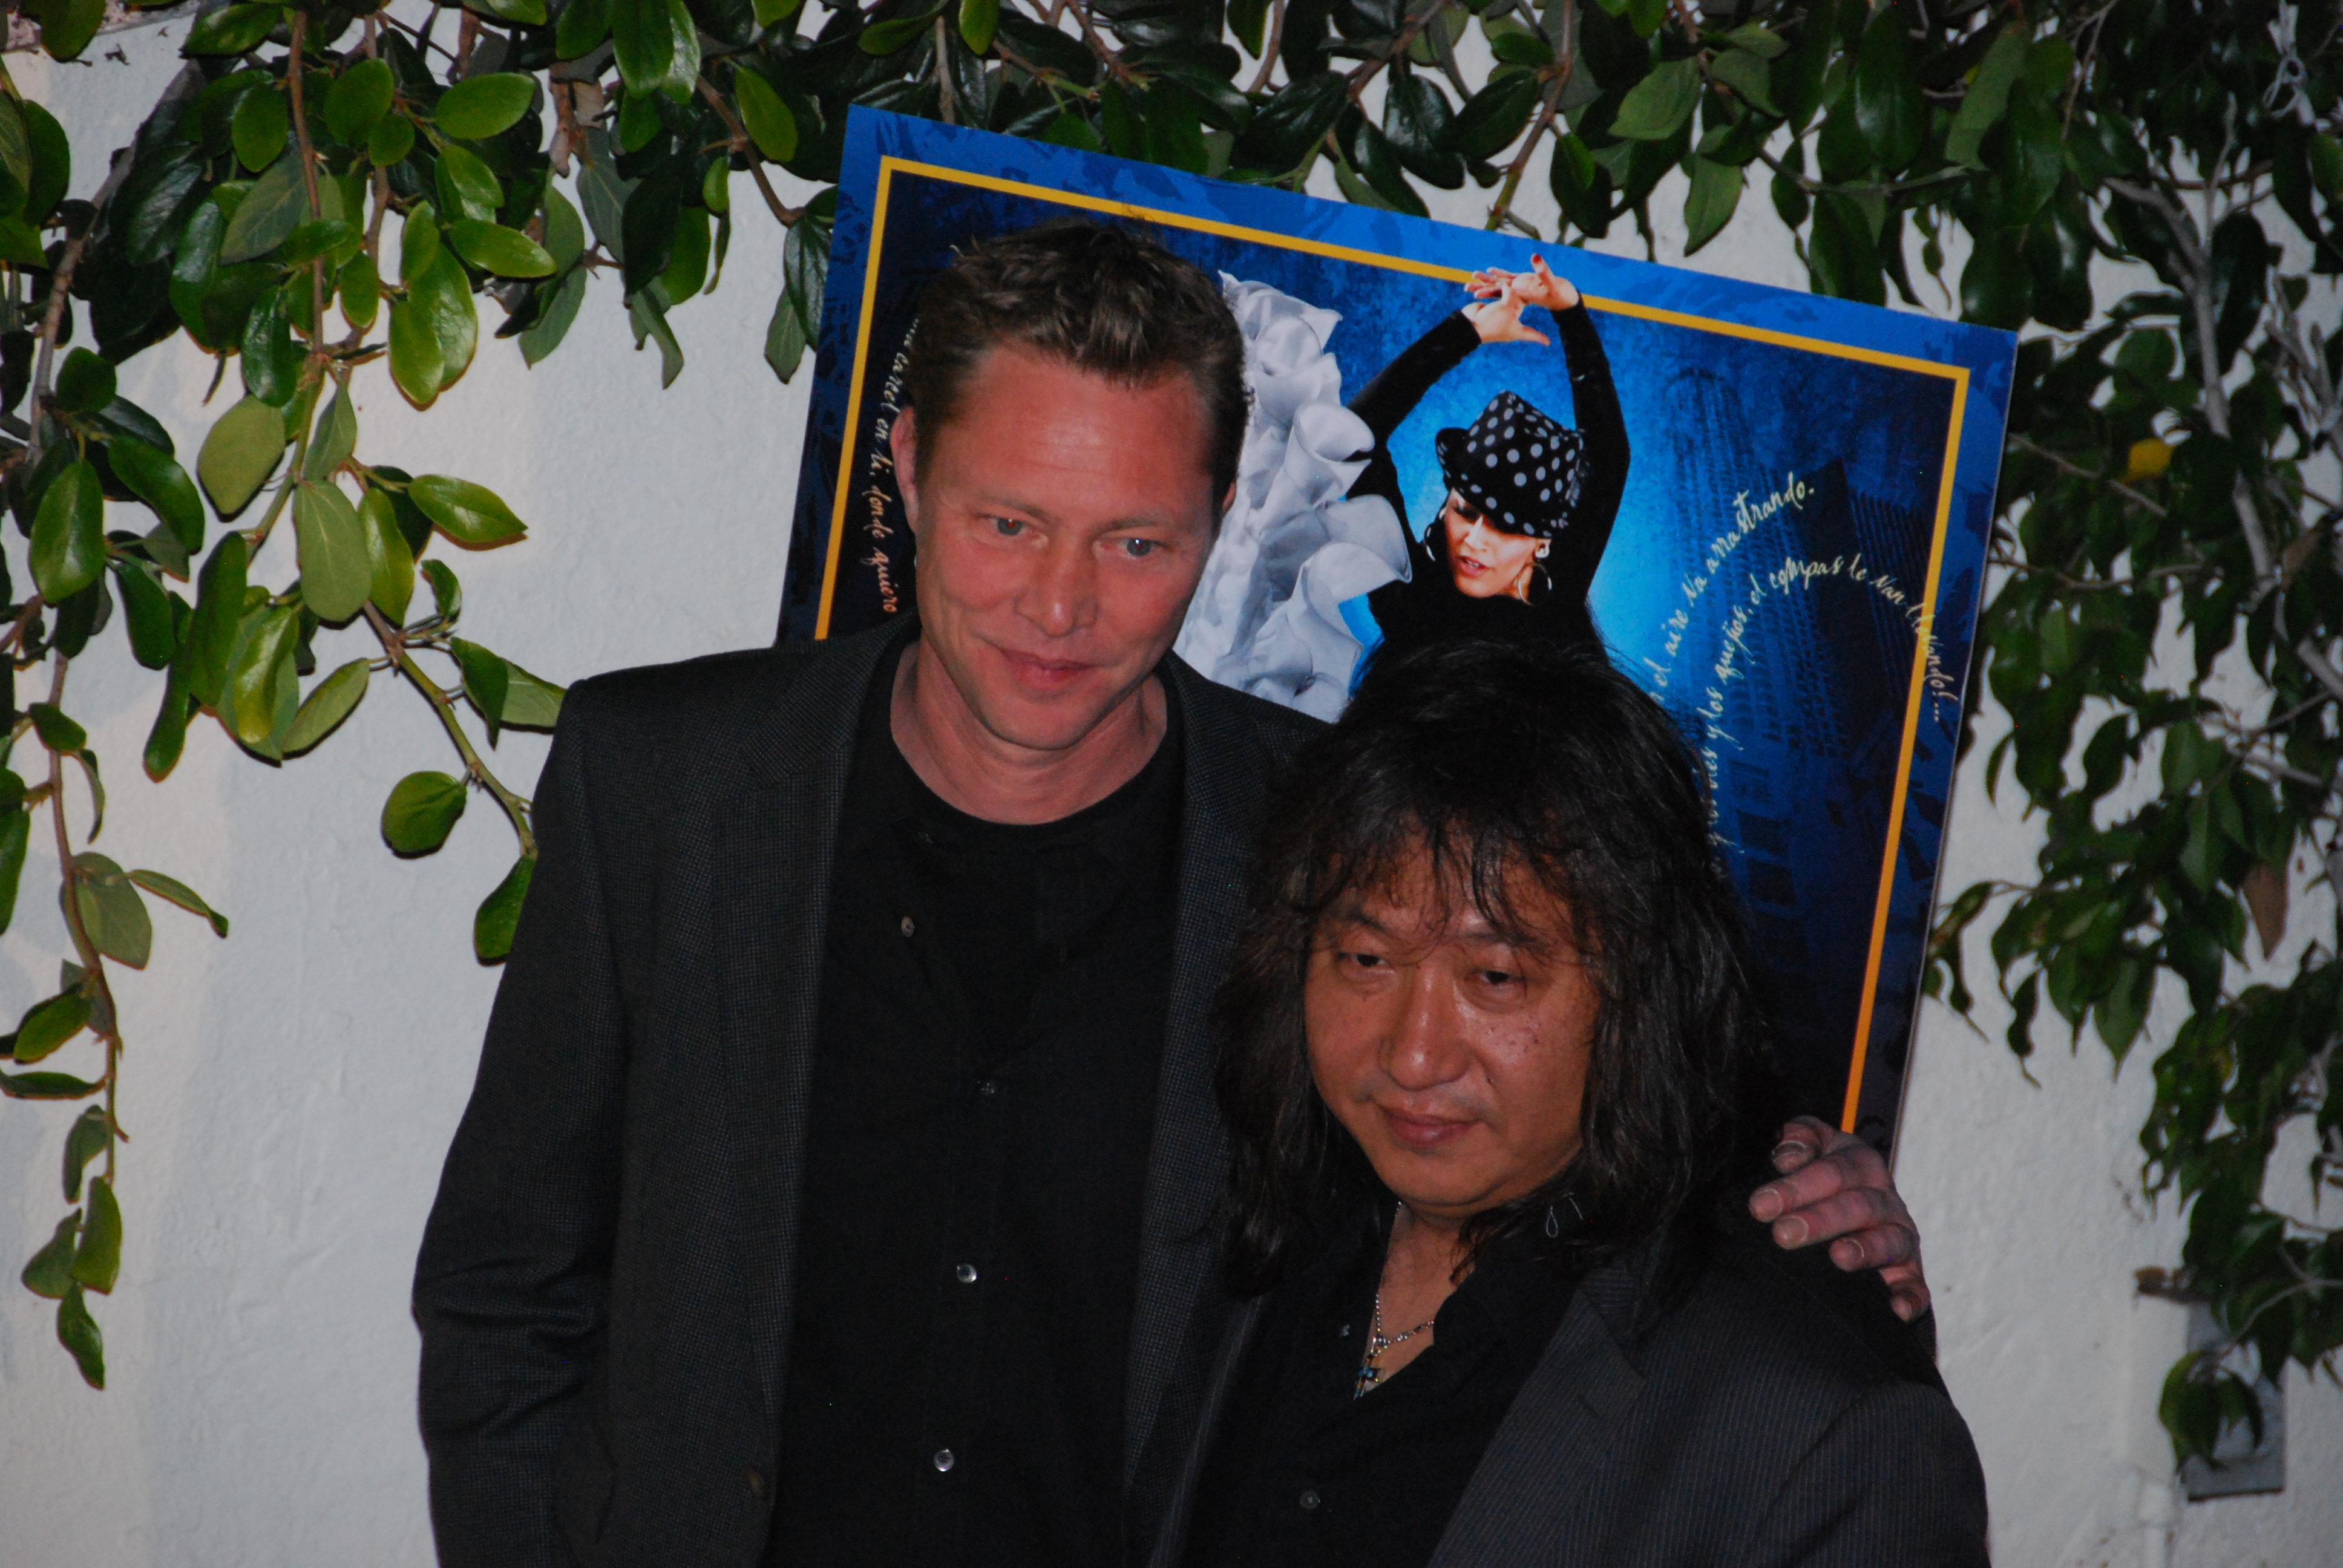 Composer & musician Martyn LeNoble with KUMPANIA guitarrista Jose Tanaka at Los Angeles Premiere